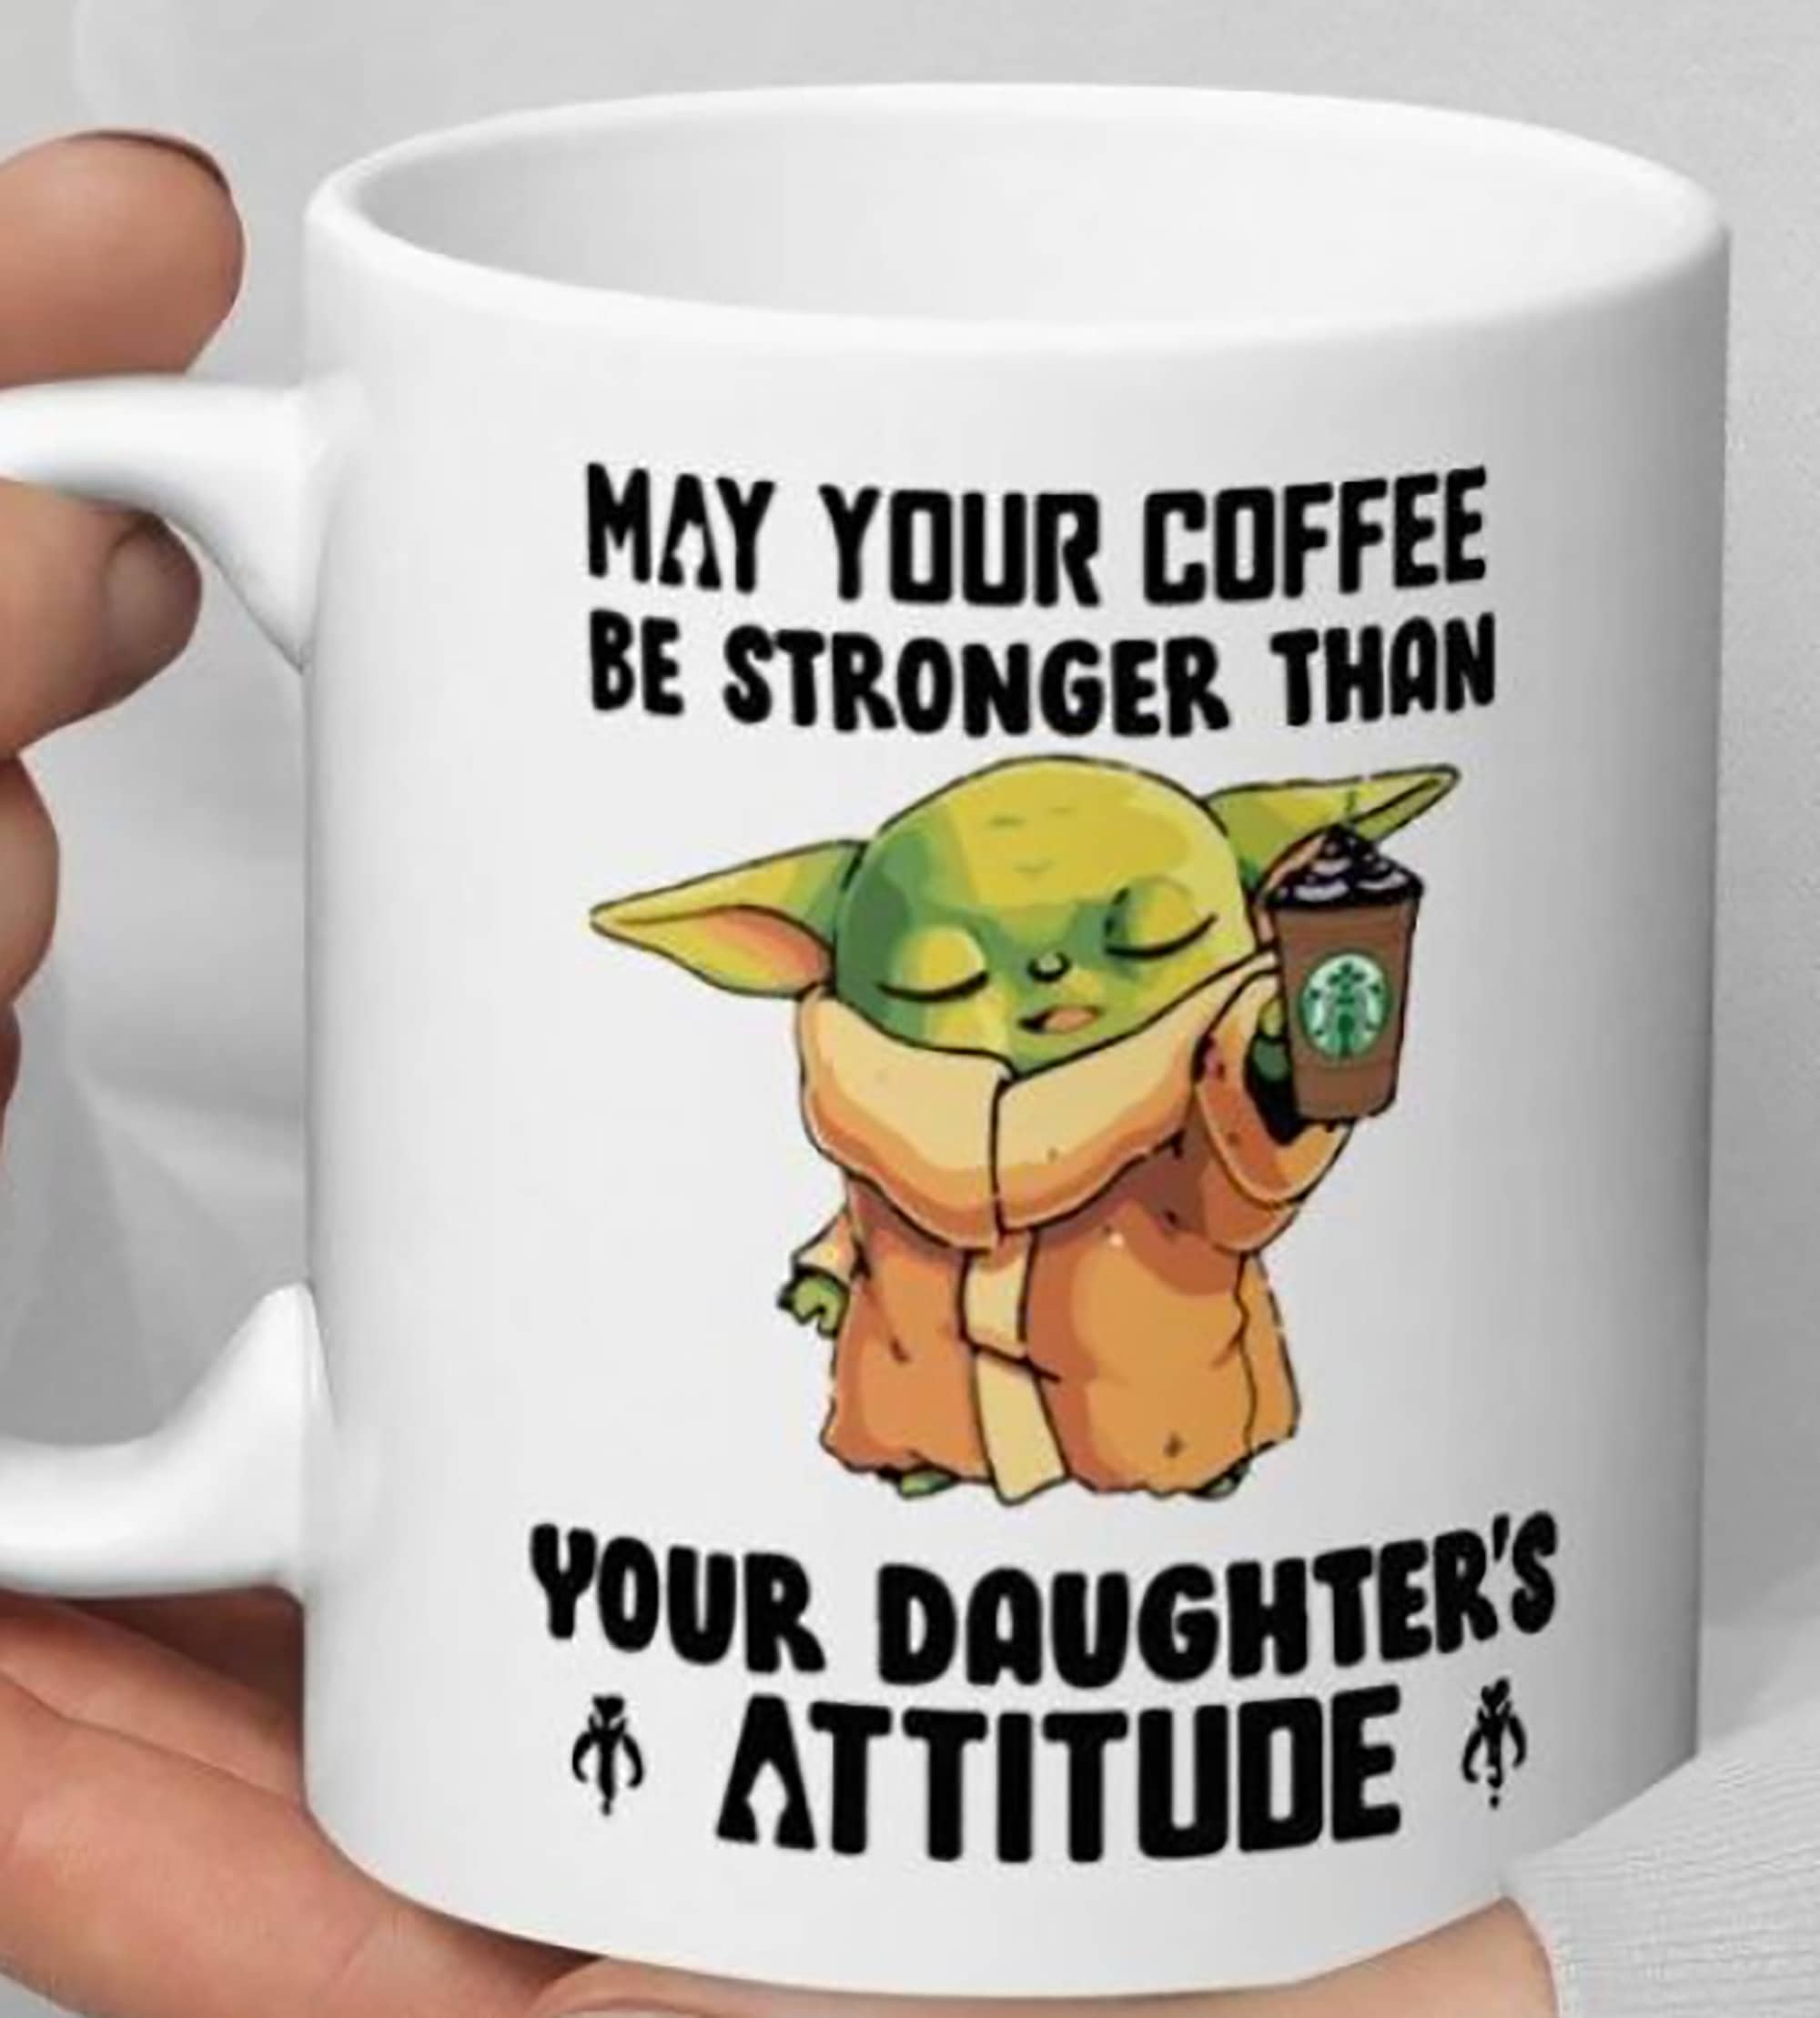 Grubby Garb Baby Yoda No Coffee No Workee 15oz. Coffee Mug Funny Novelty  Coffee Mugs,Great Gift Cu O…See more Grubby Garb Baby Yoda No Coffee No